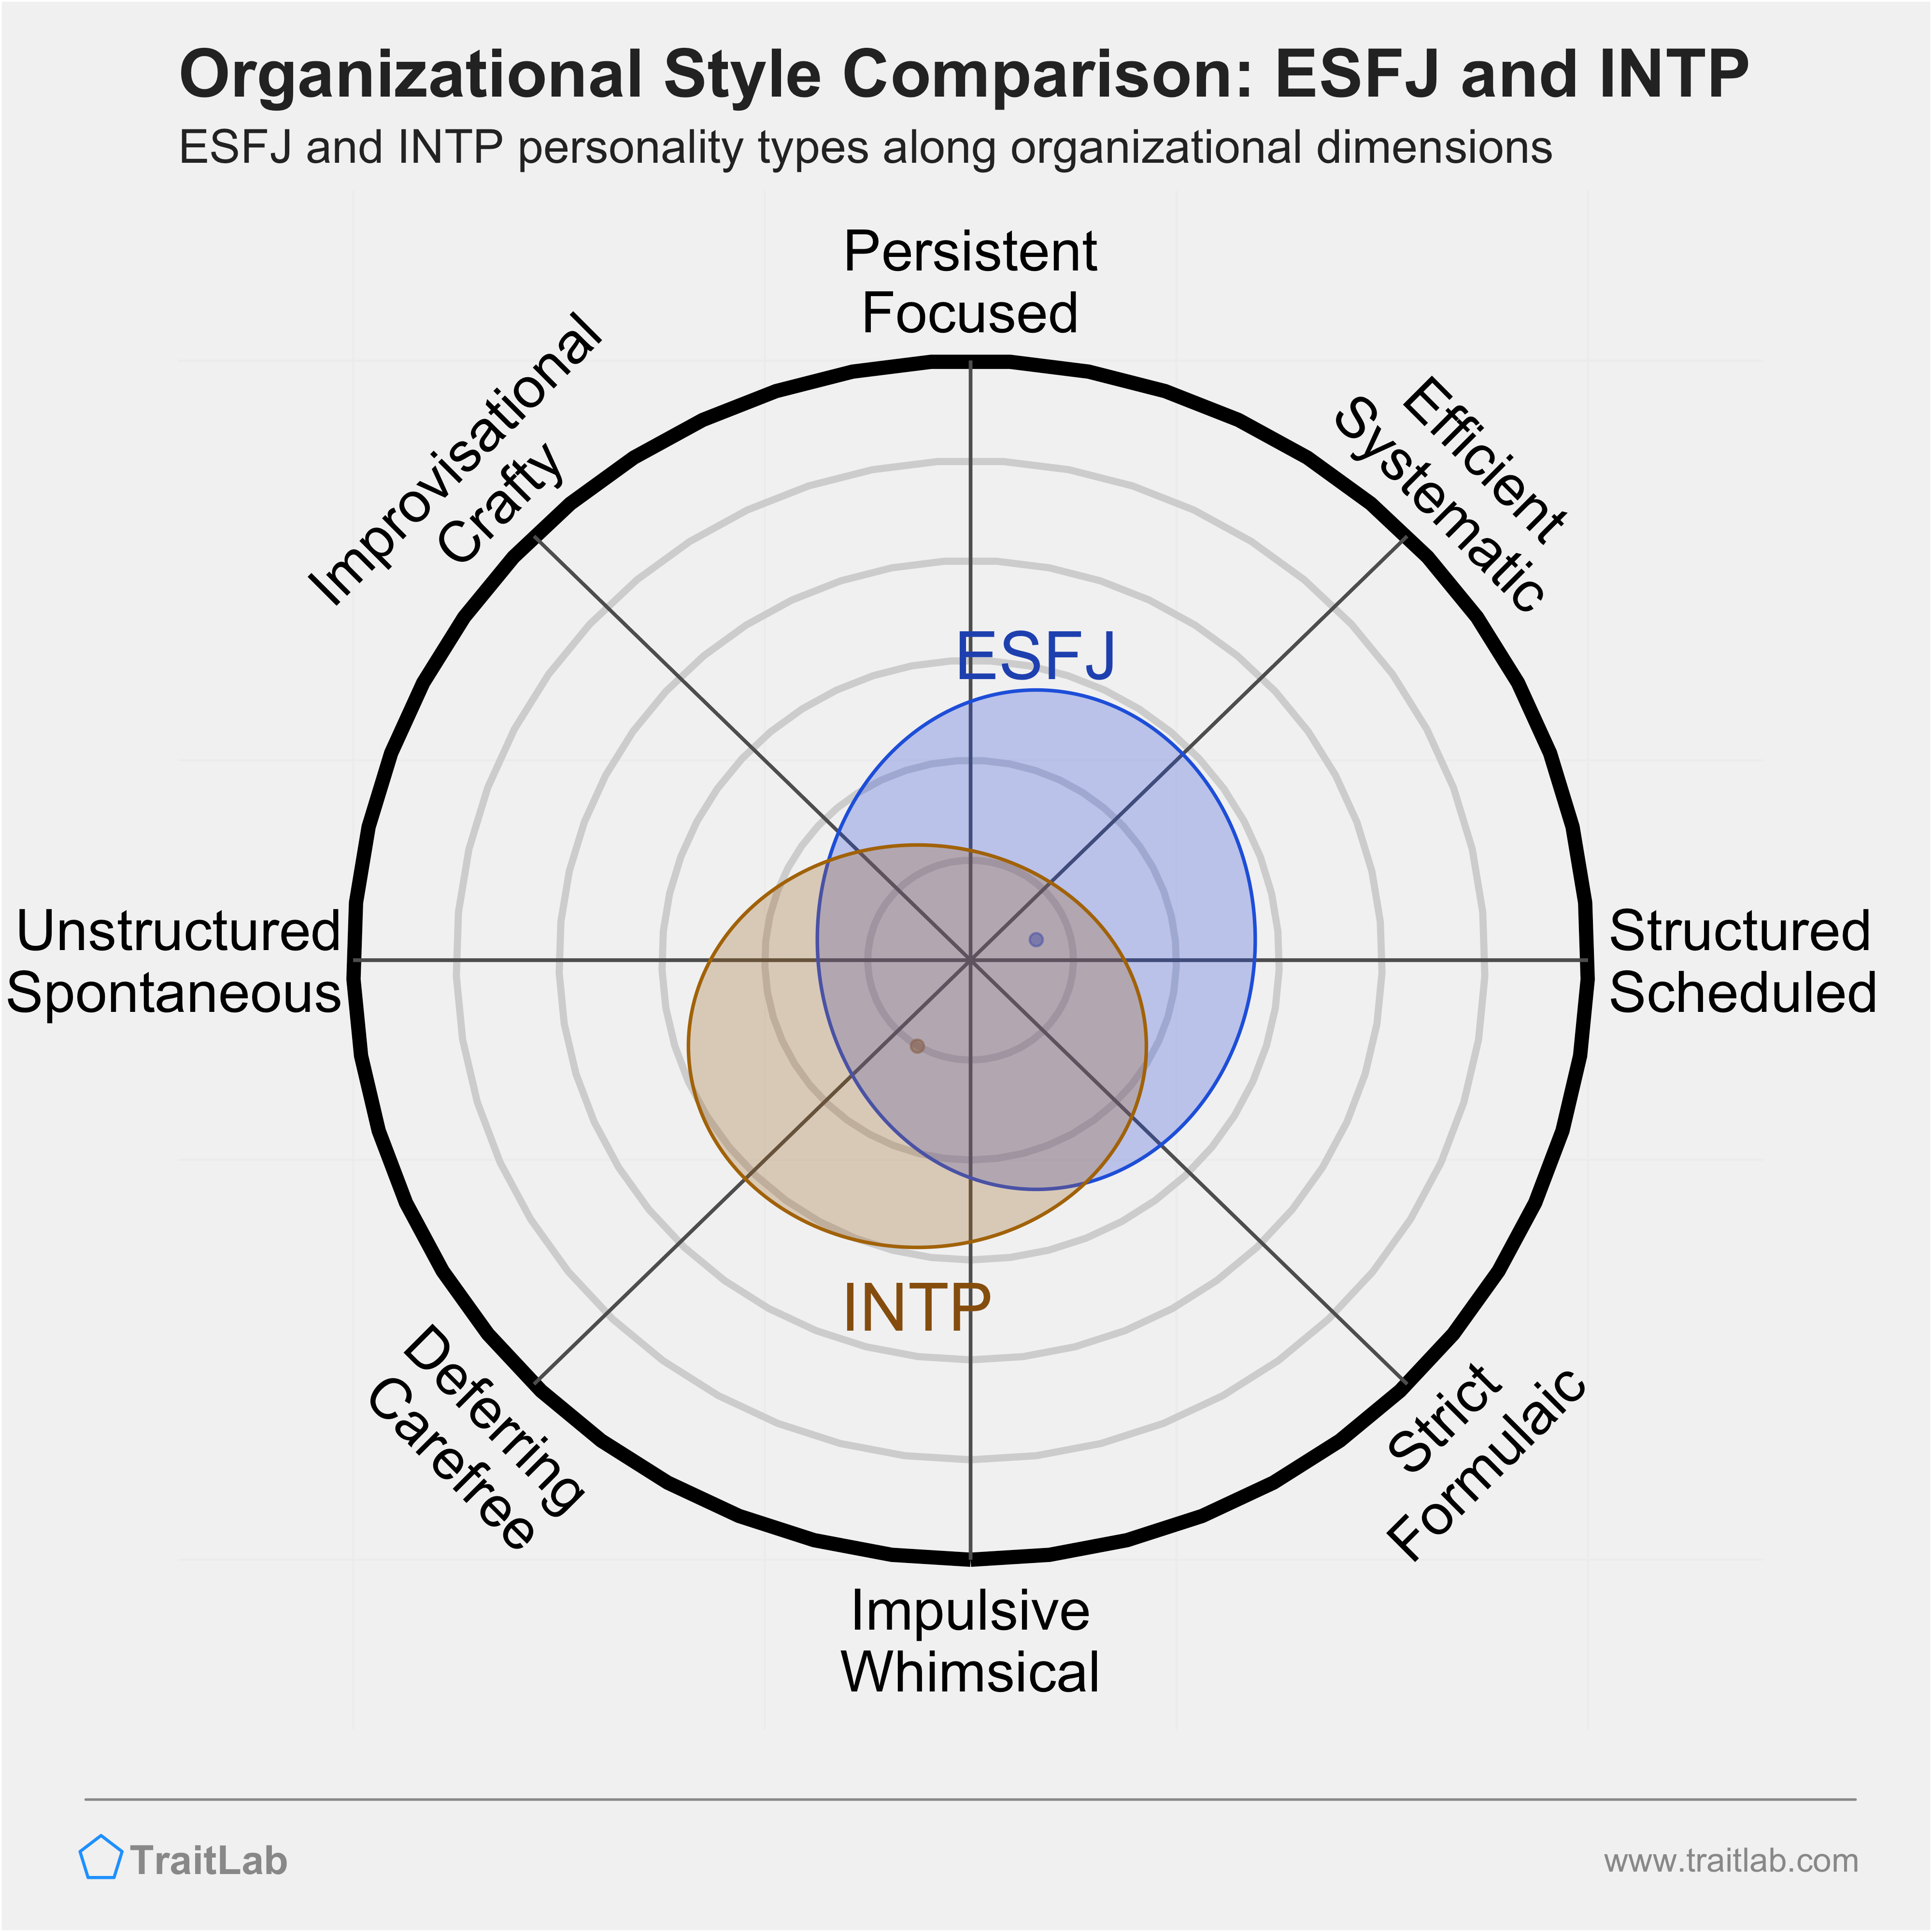 ESFJ and INTP comparison across organizational dimensions